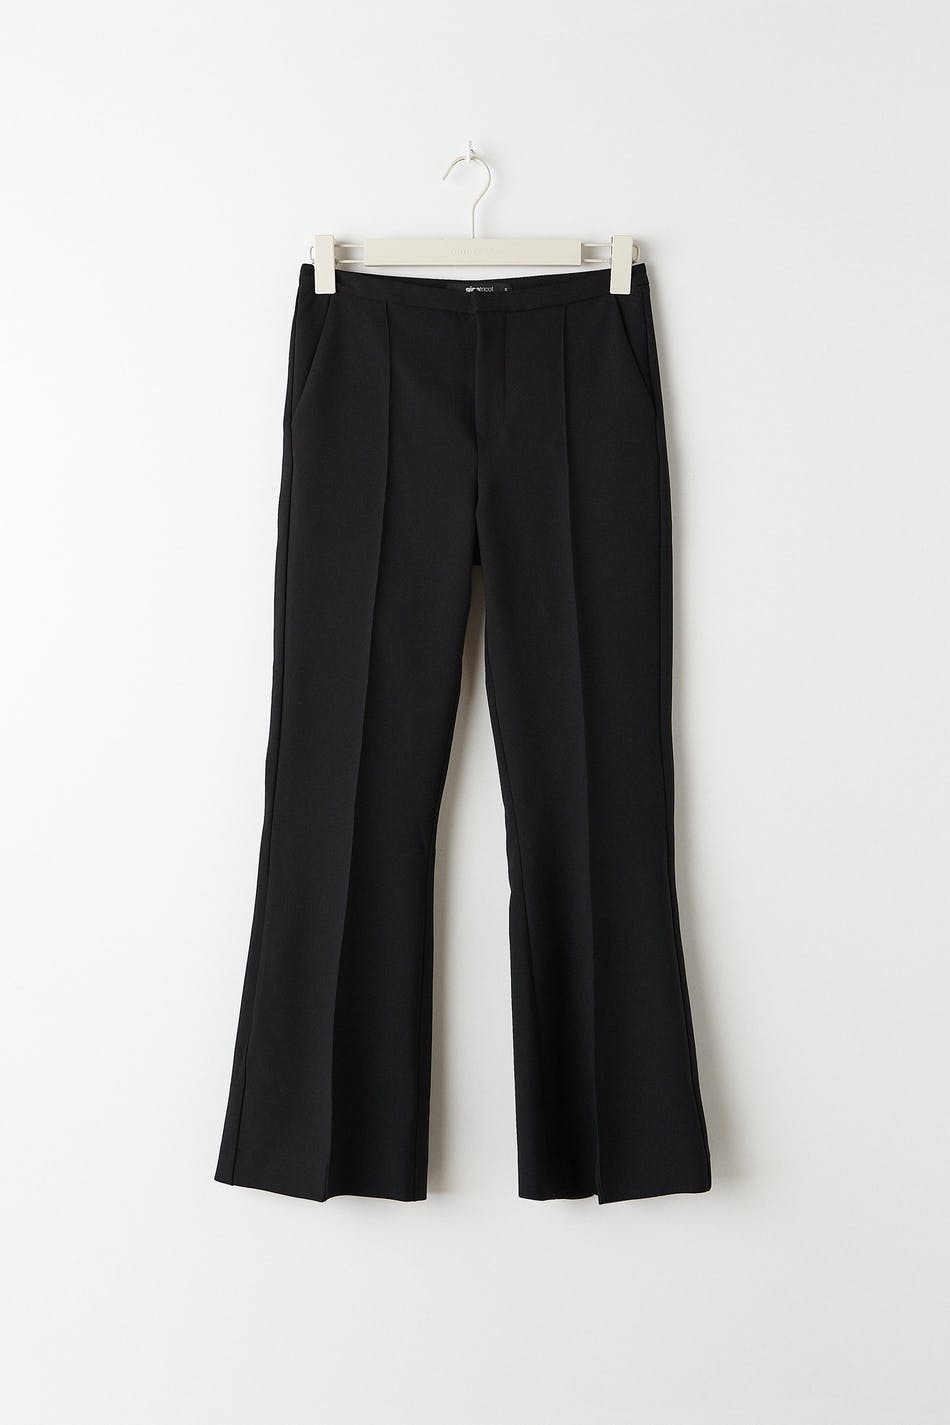 Gina Tricot - Petite bootcut trousers - Vide bukser- Black - L - Female